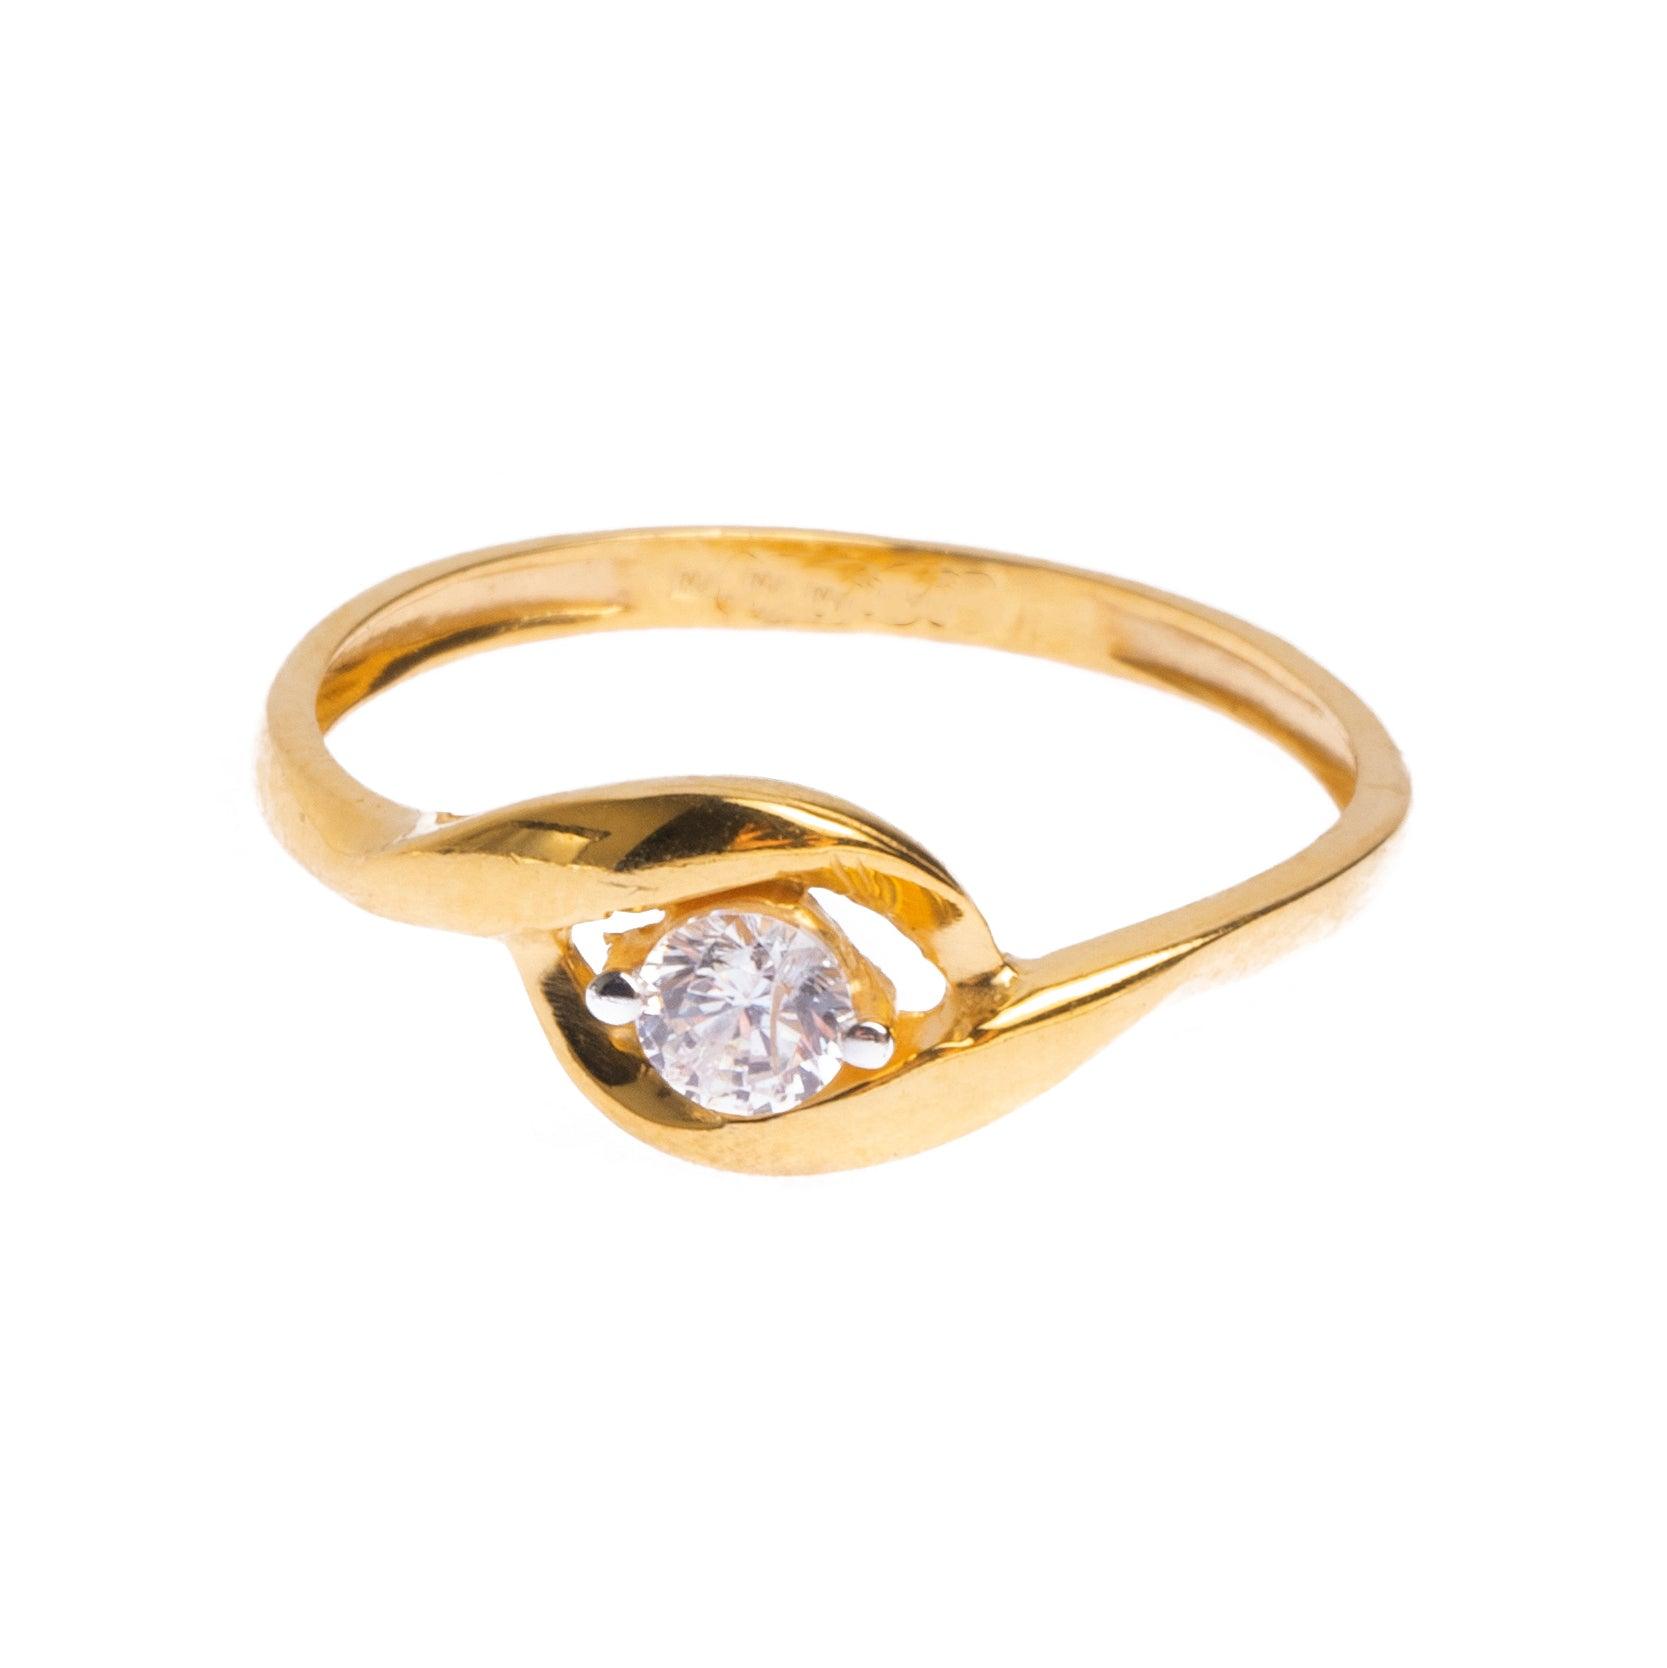 22ct Gold Ring with Swarovski Zirconia Stone LR16352